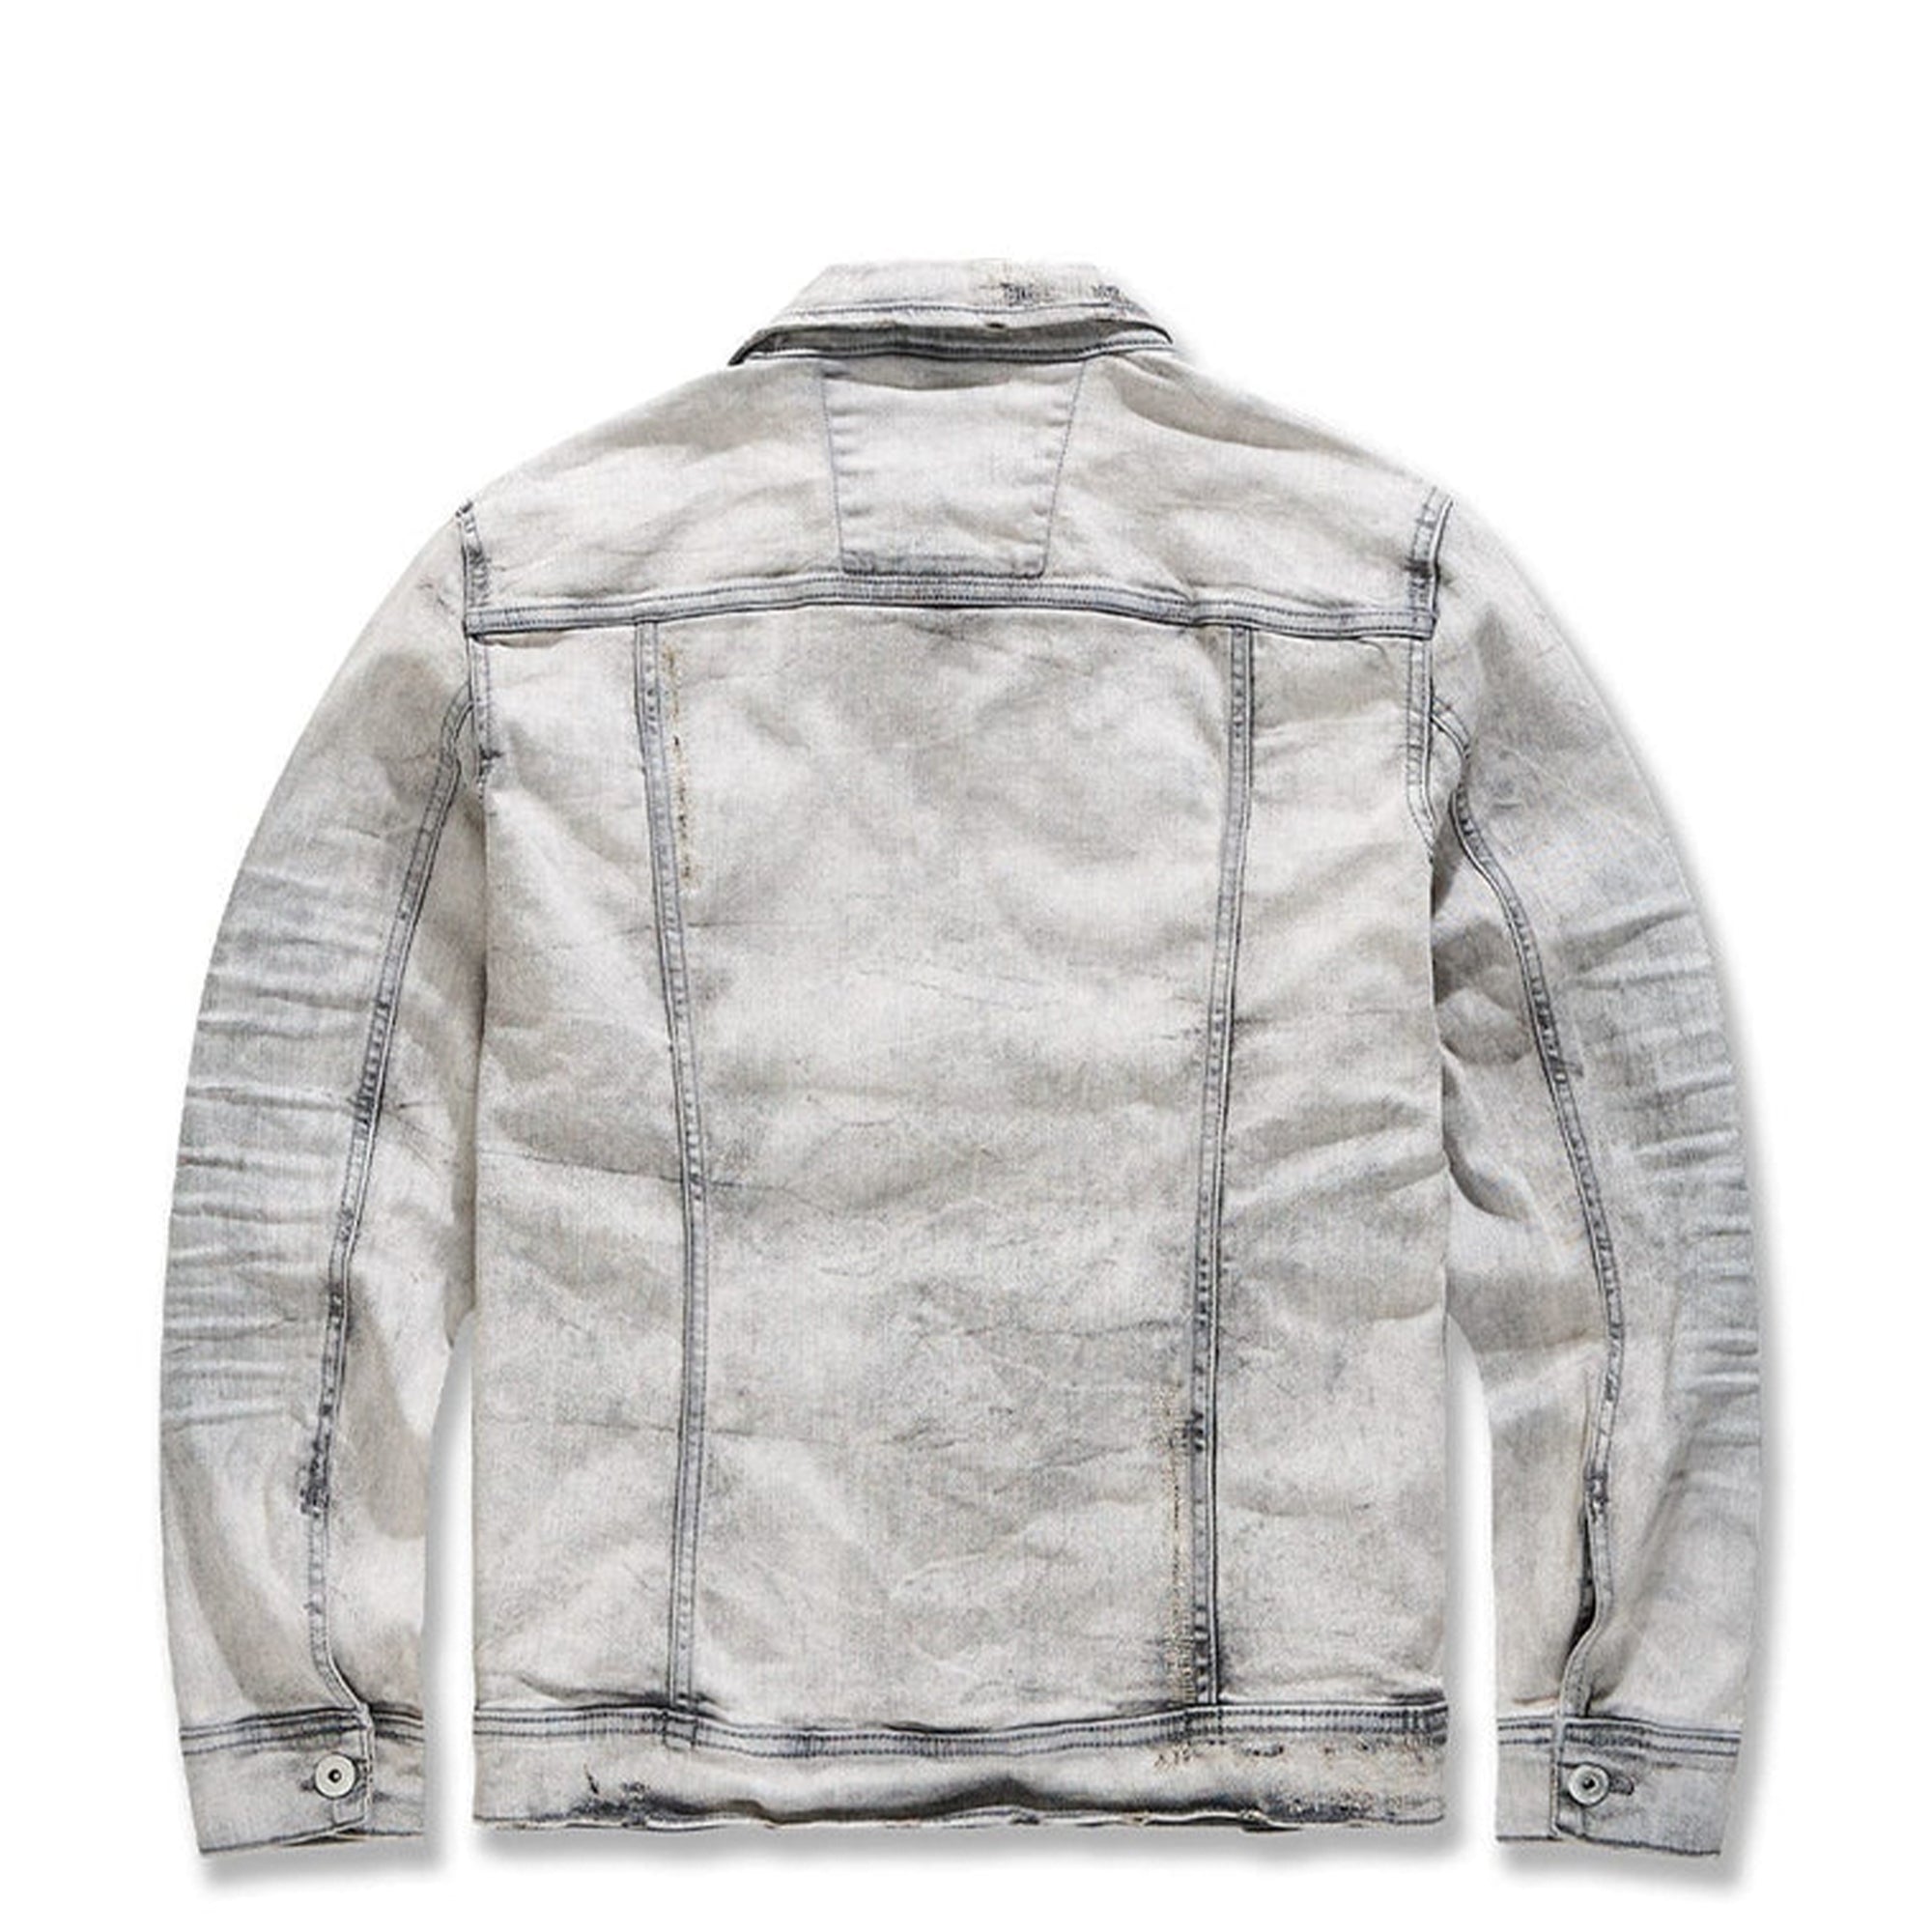 Oversized Denim Jacket - Light gray - Ladies | H&M US